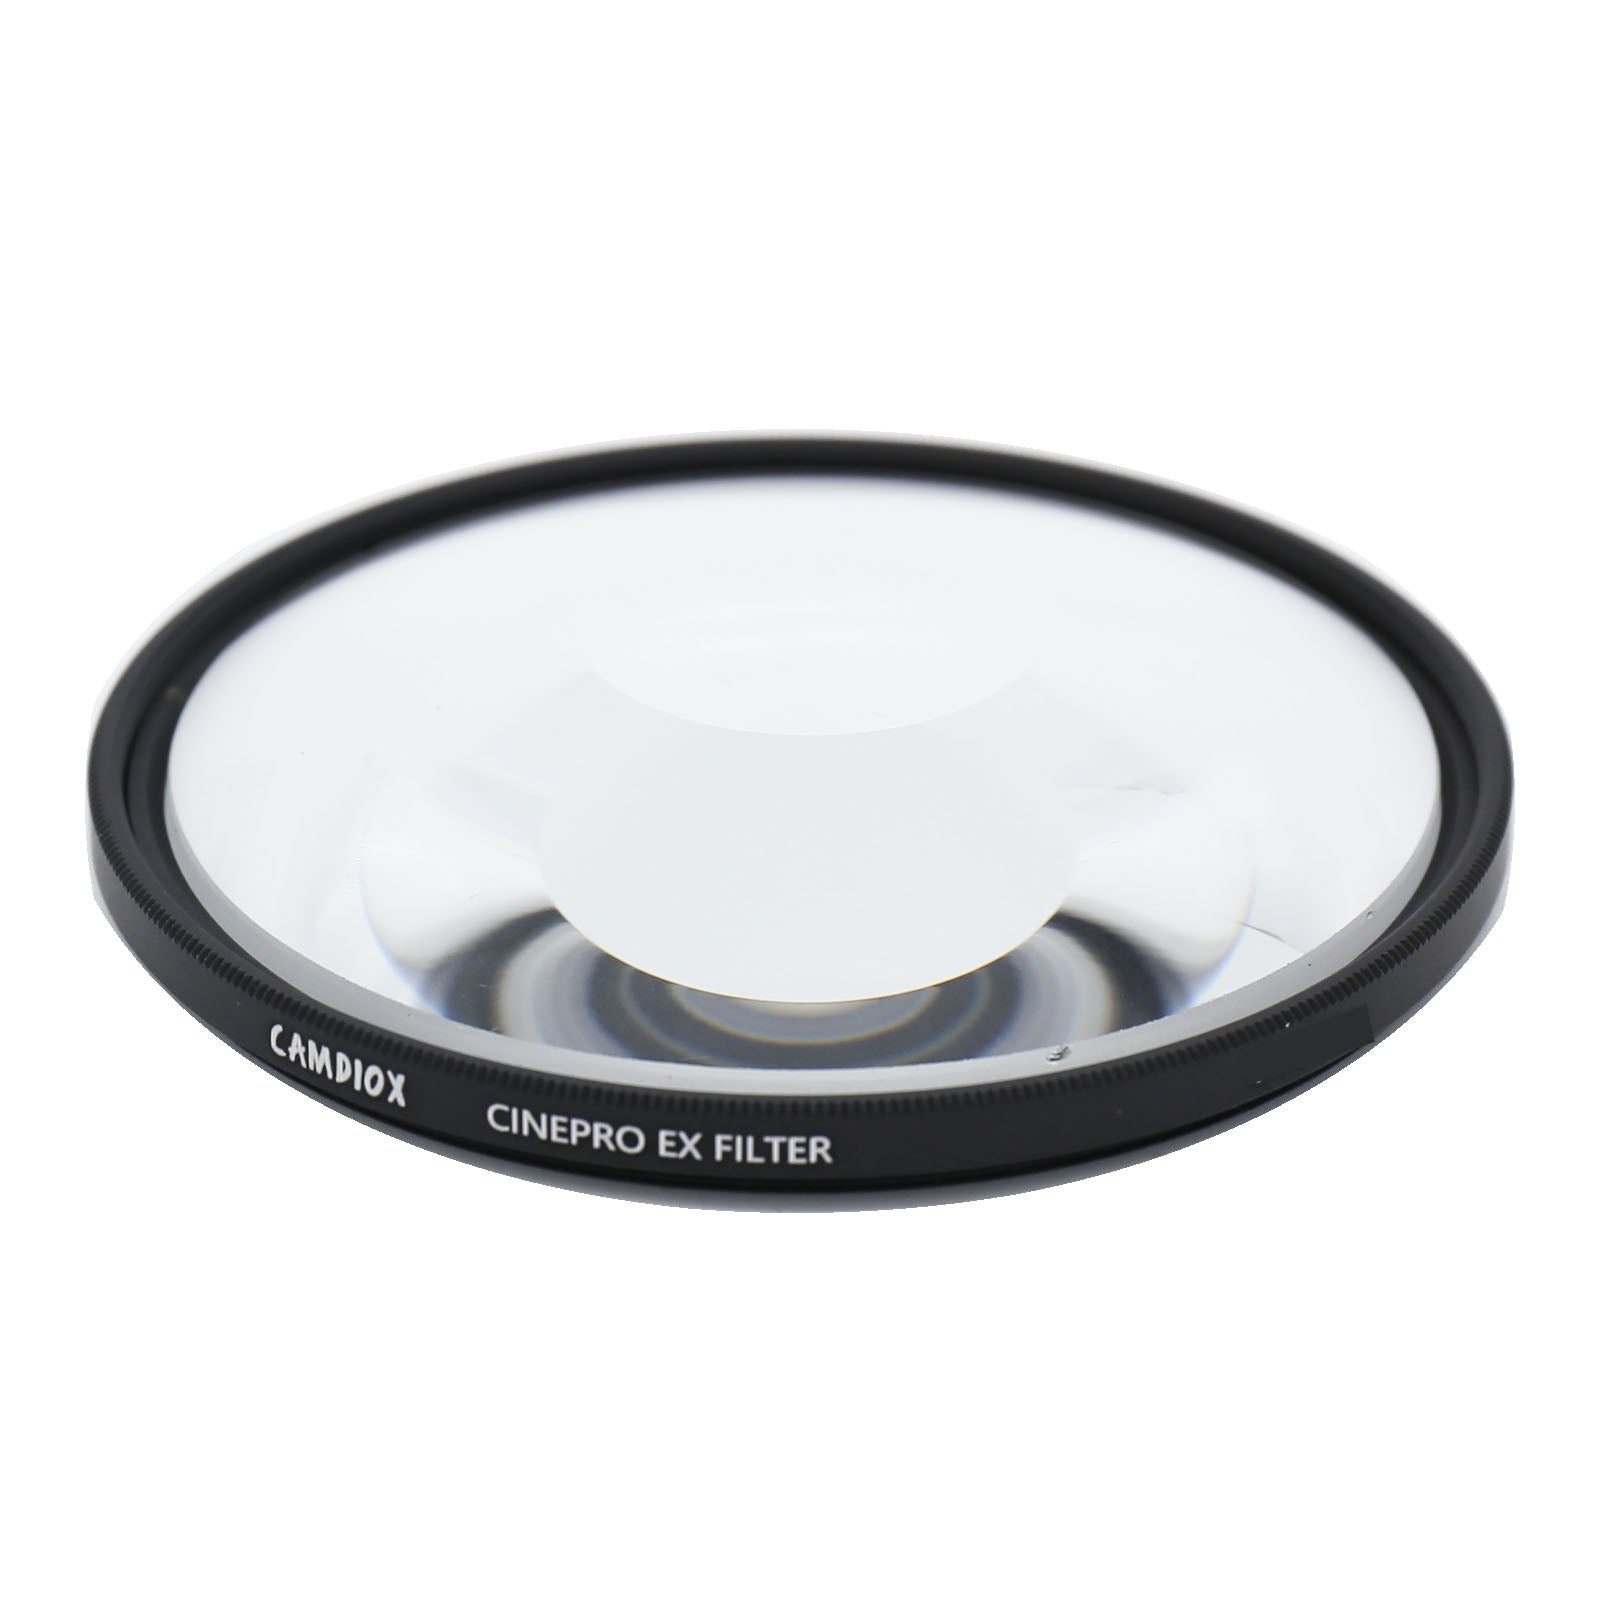 Camdiox Cinepro Pro Filter - Halo - effect filter for Canon Nikon Sony Olympus Leica DSLR mirrorless camera lenses